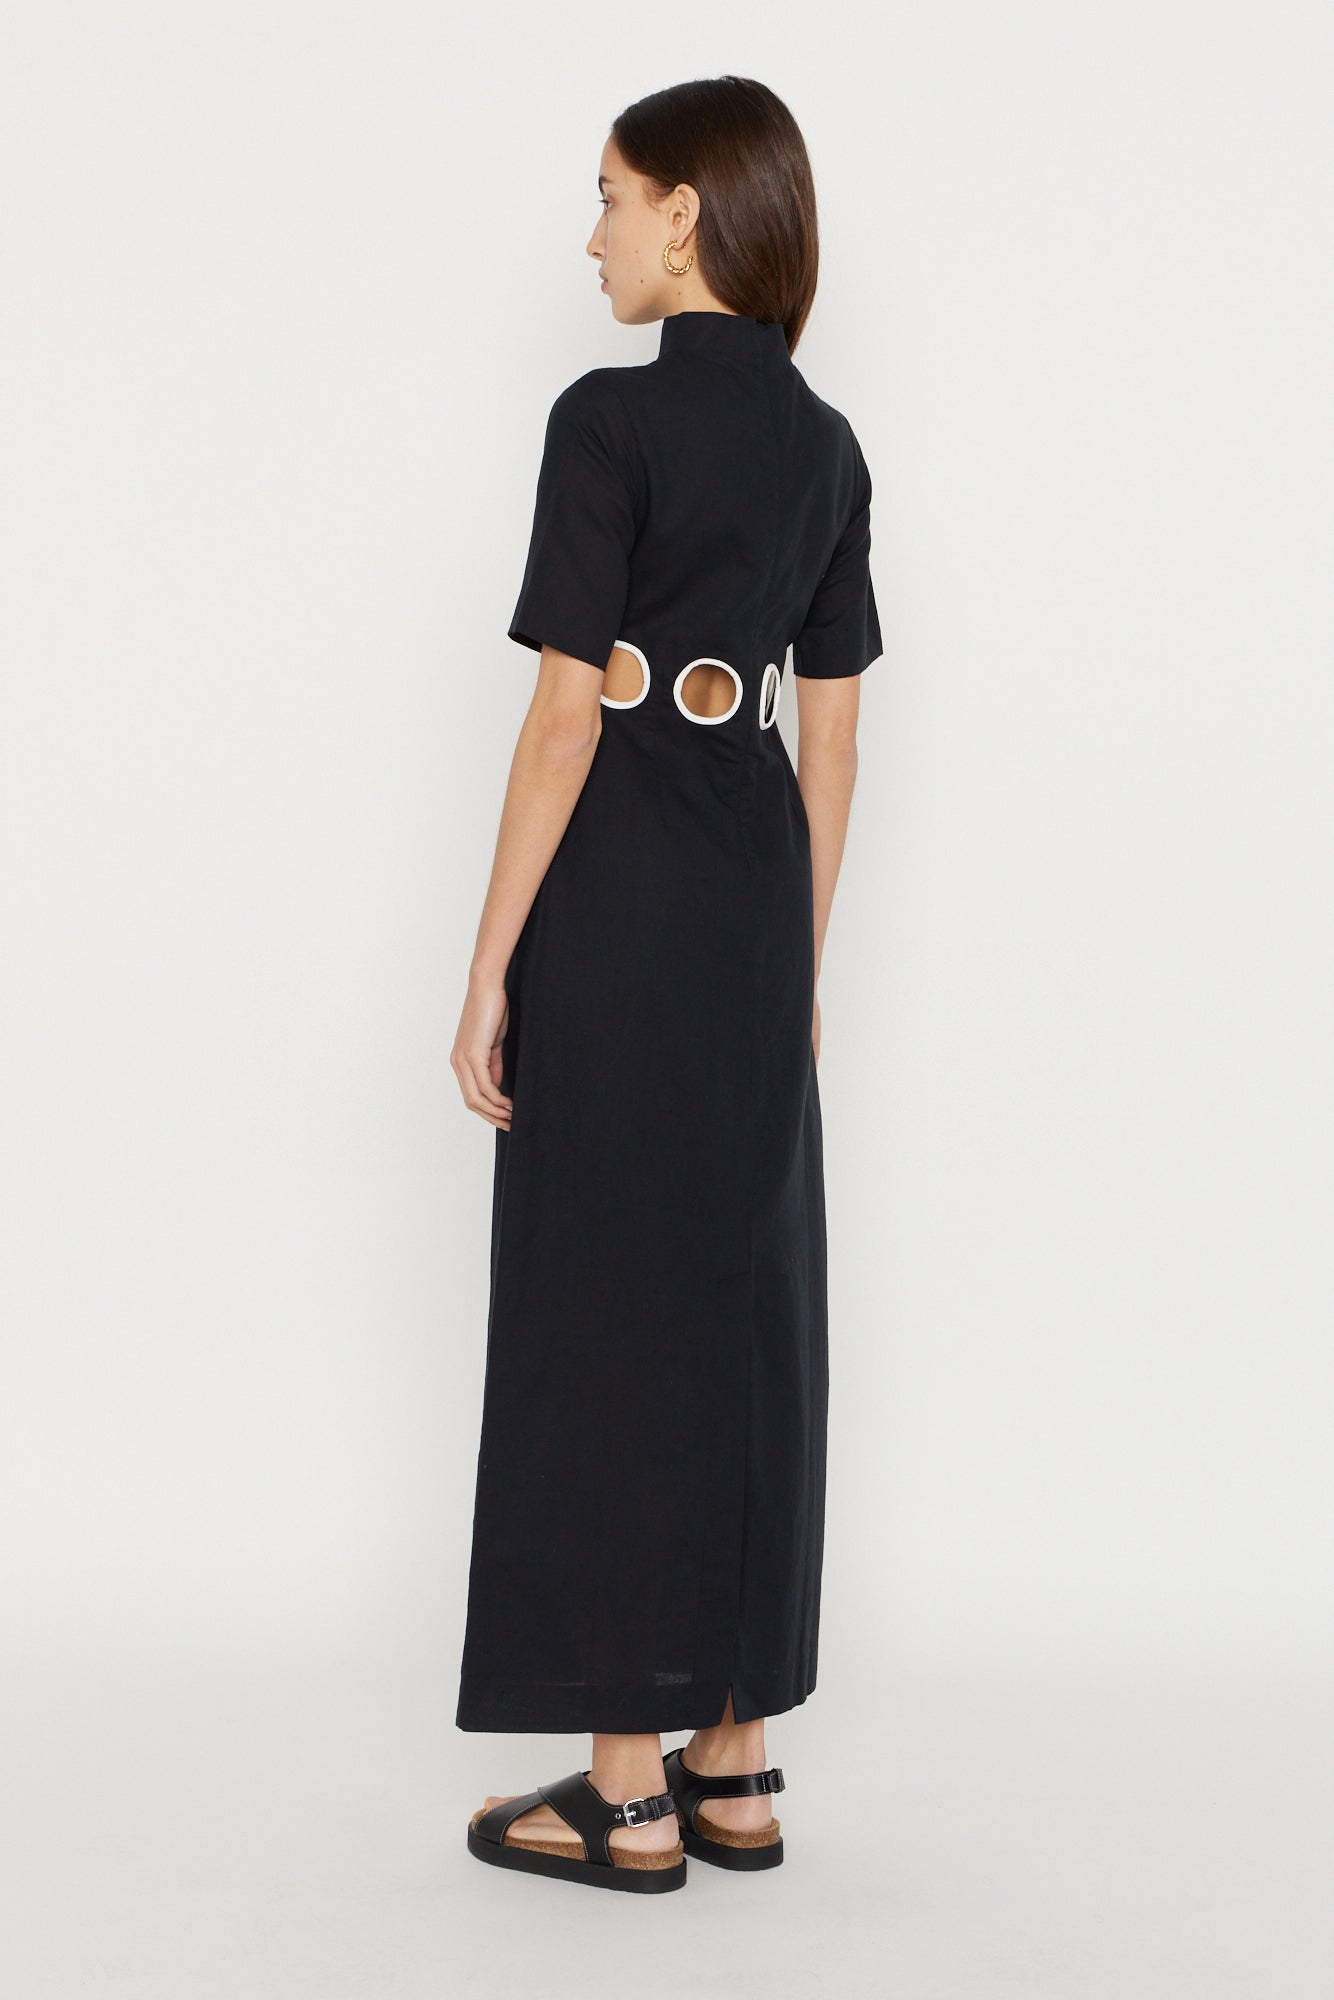 Black Maxi Dress with Circular Cutouts